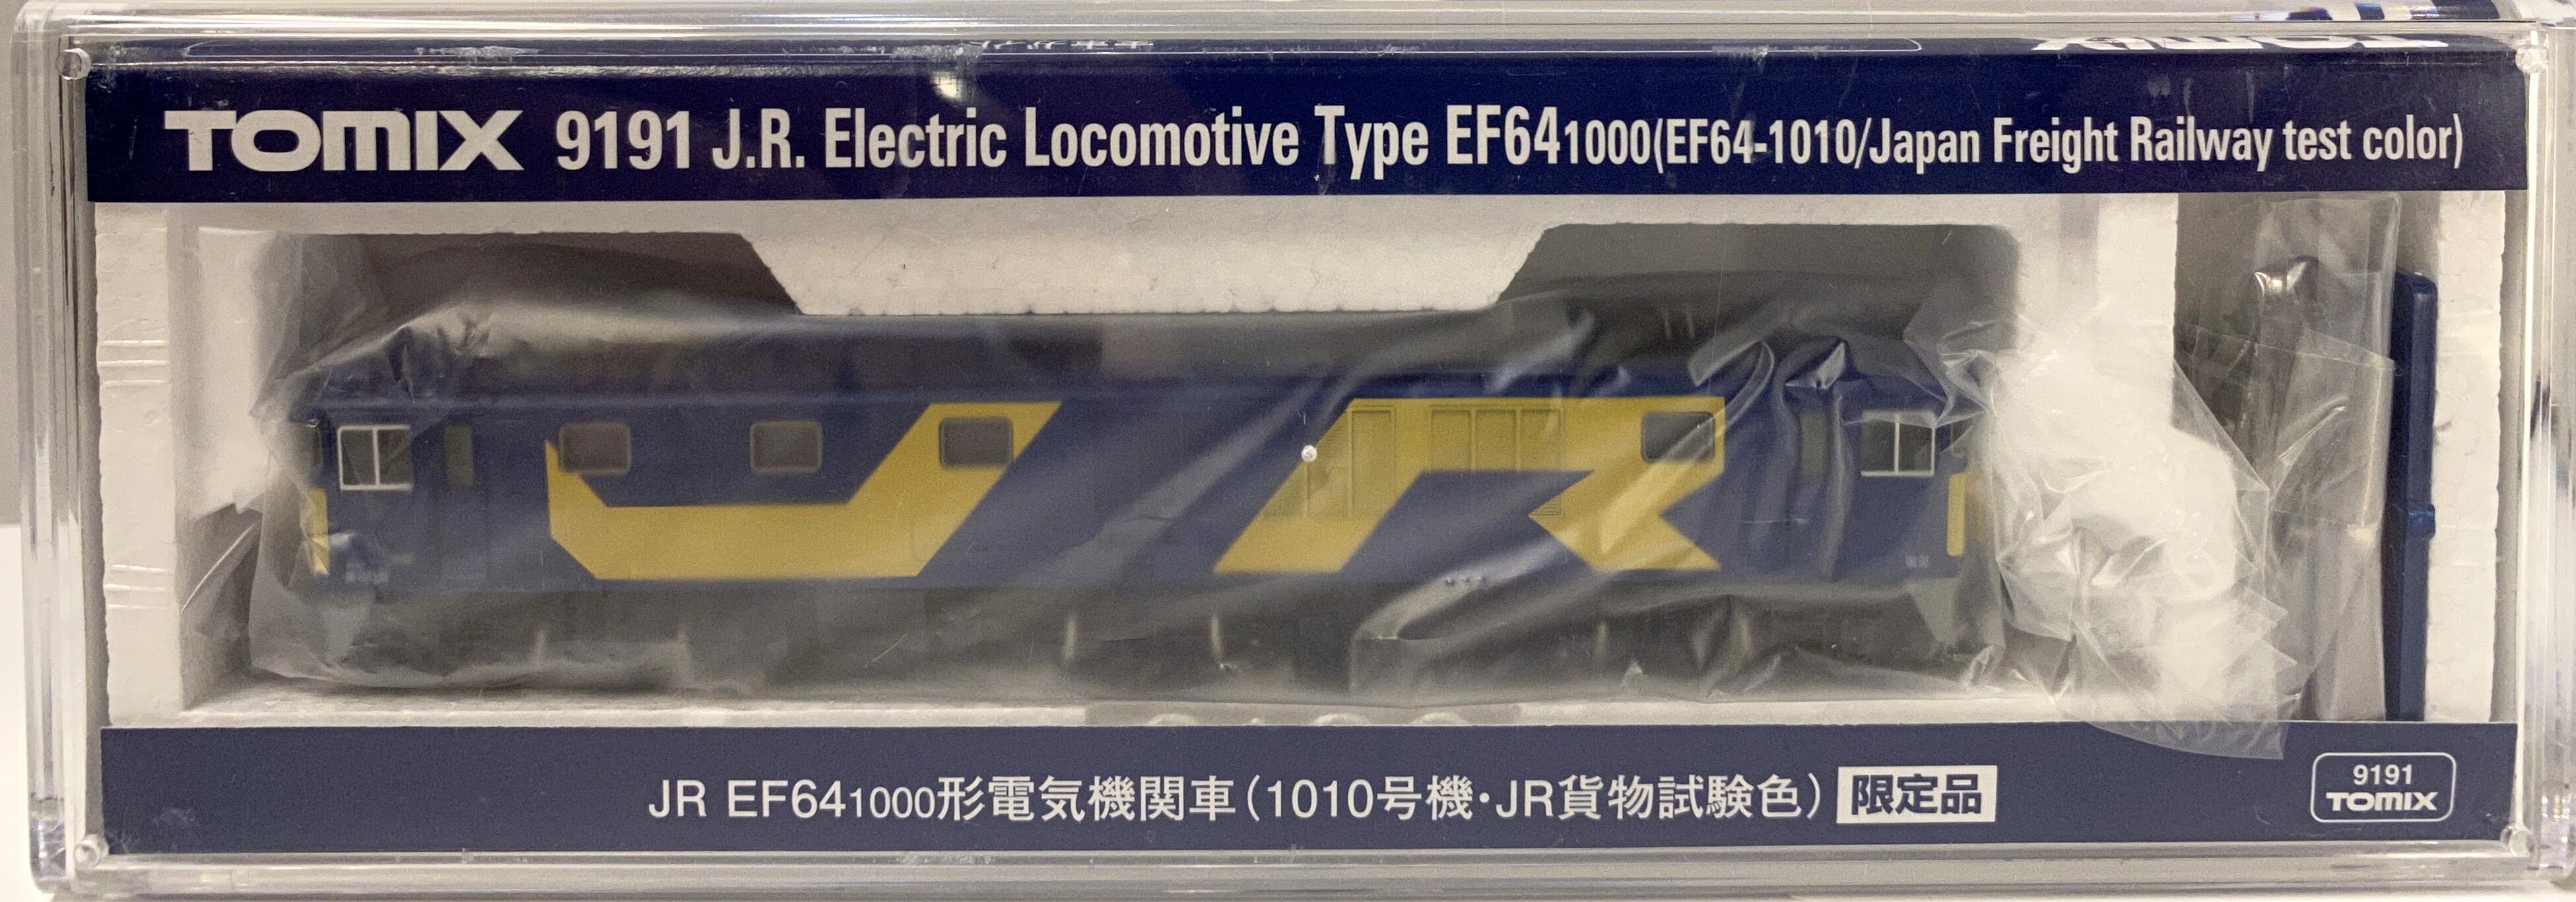 TOMIX Nゲージ 9191 【JR EF64-1000形電気機関車 (1010号機・JR貨物試験色) [限定品]】